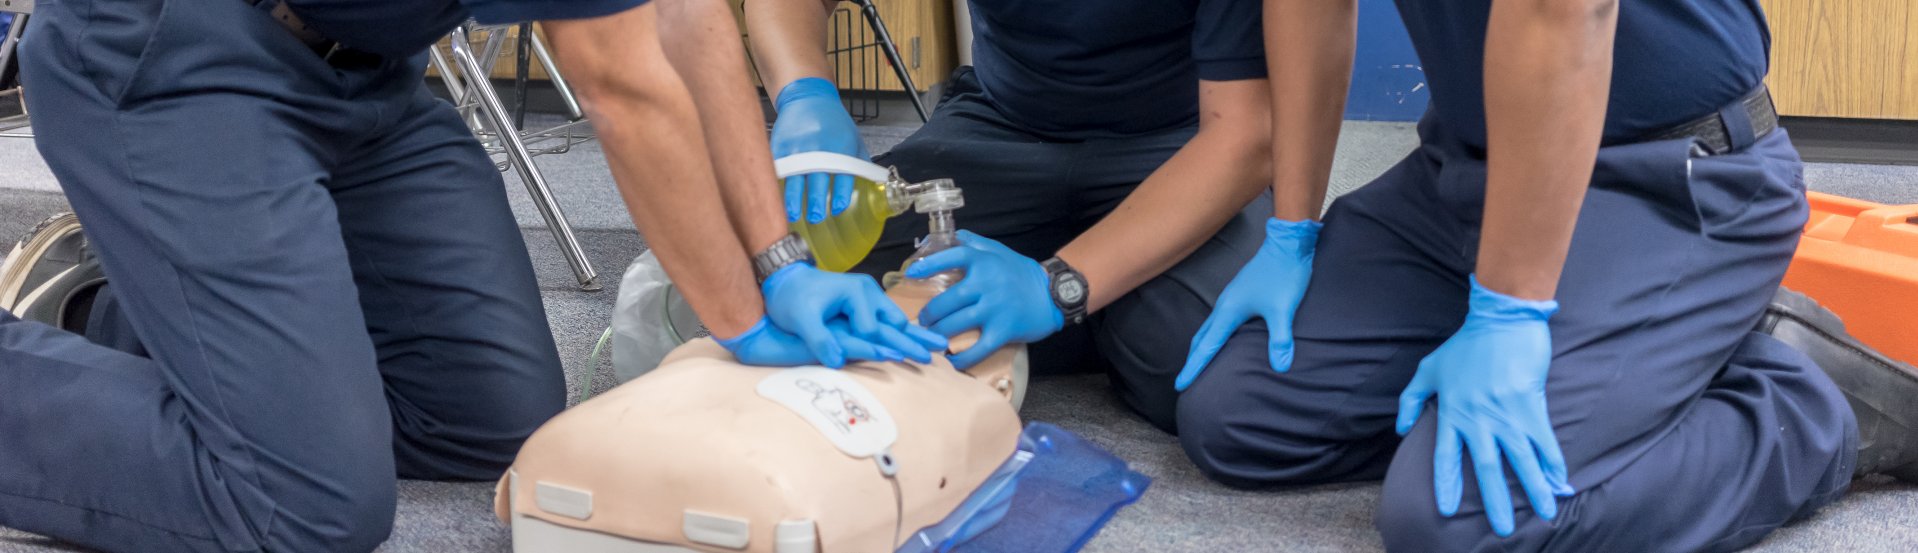 EMT students practicing resuscitation on a dummy